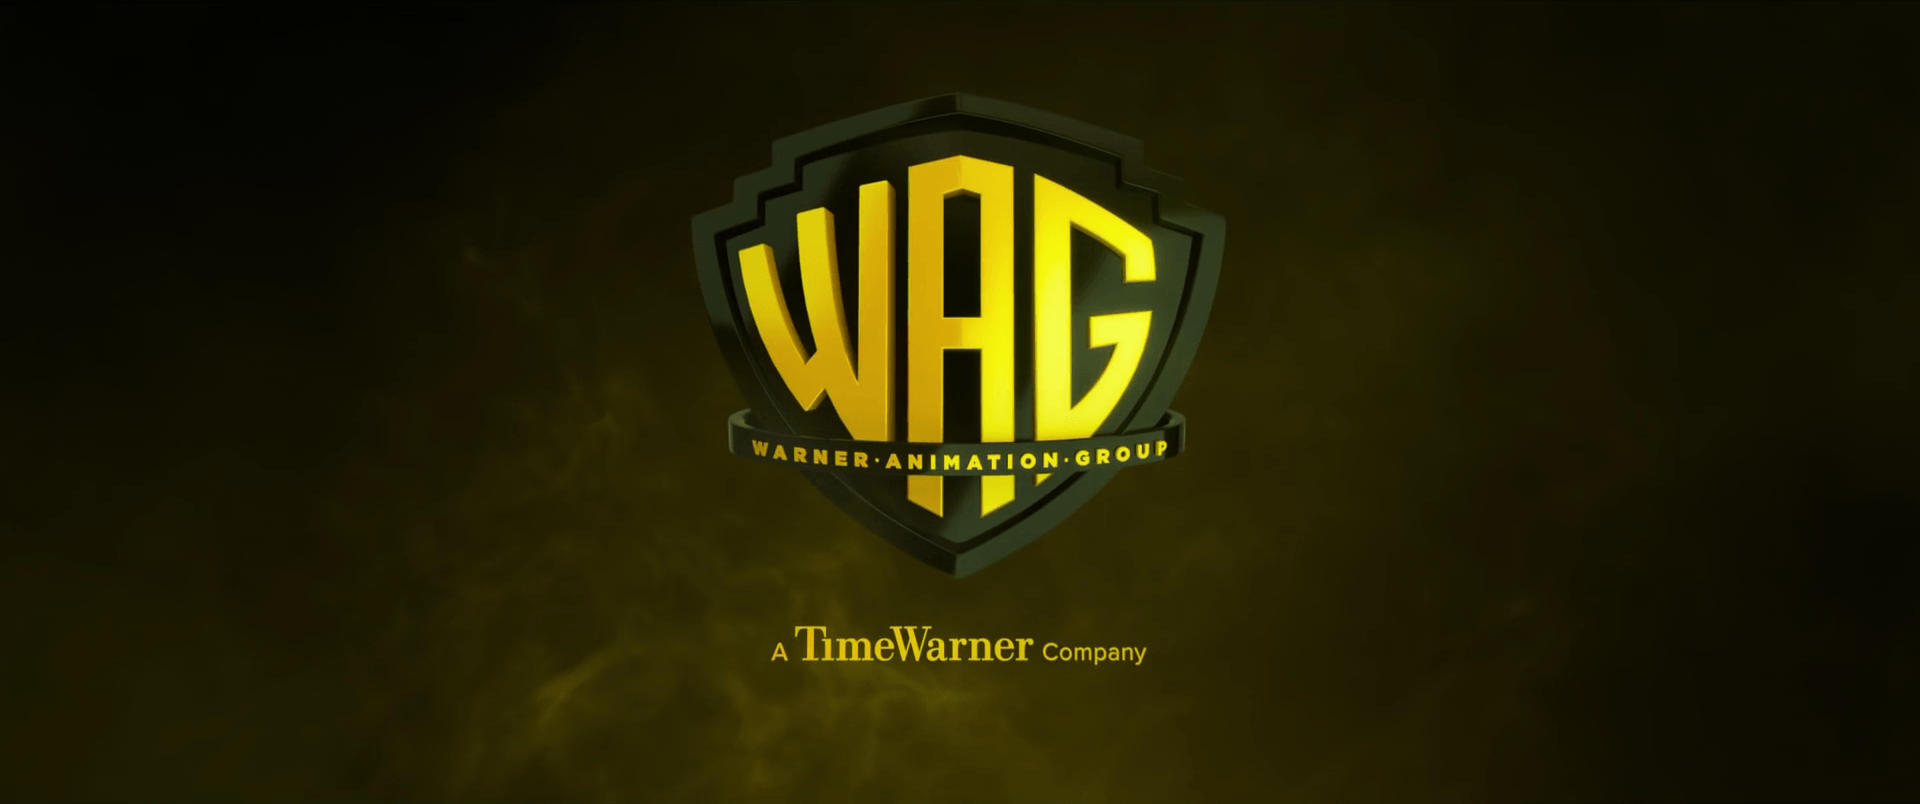 Warner Animation Group Logo - Image - Warner animation group lego batman movie logo.png | Idea ...